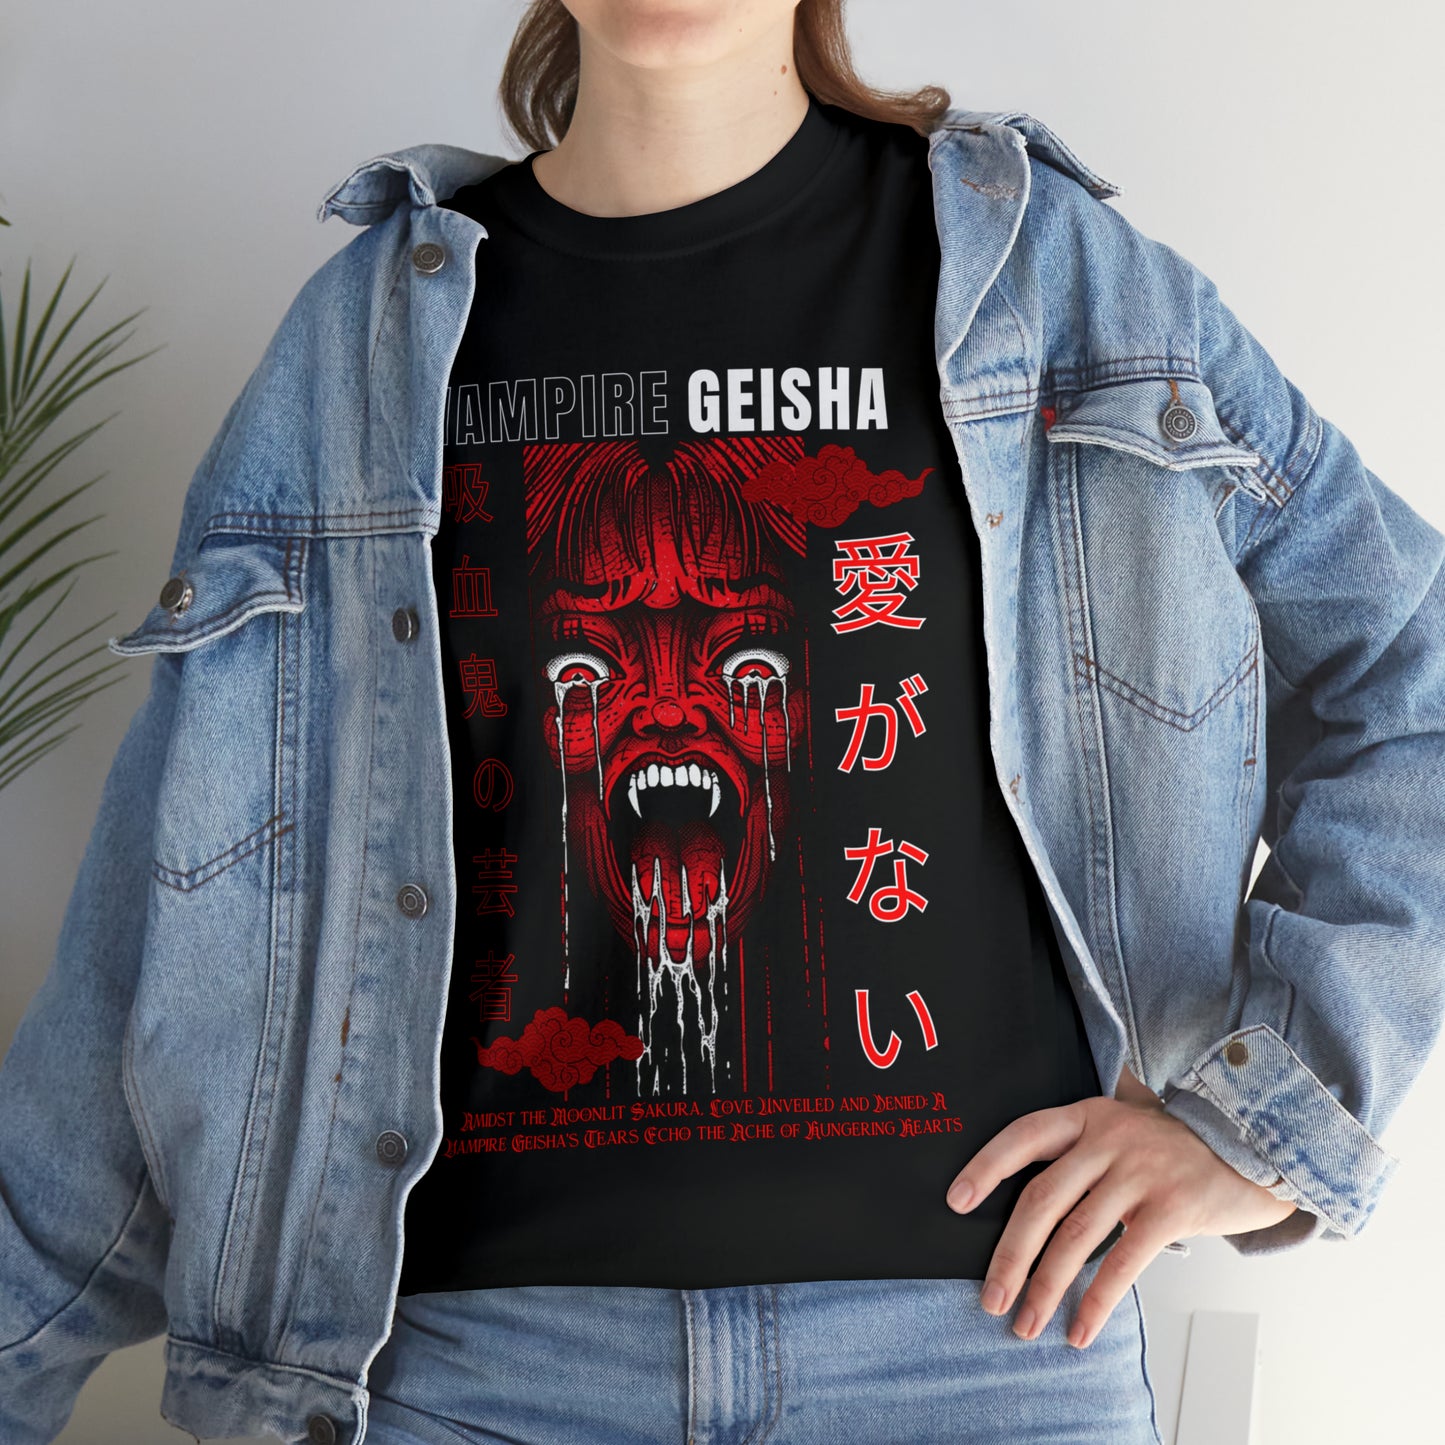 Vampire Geisha Tee